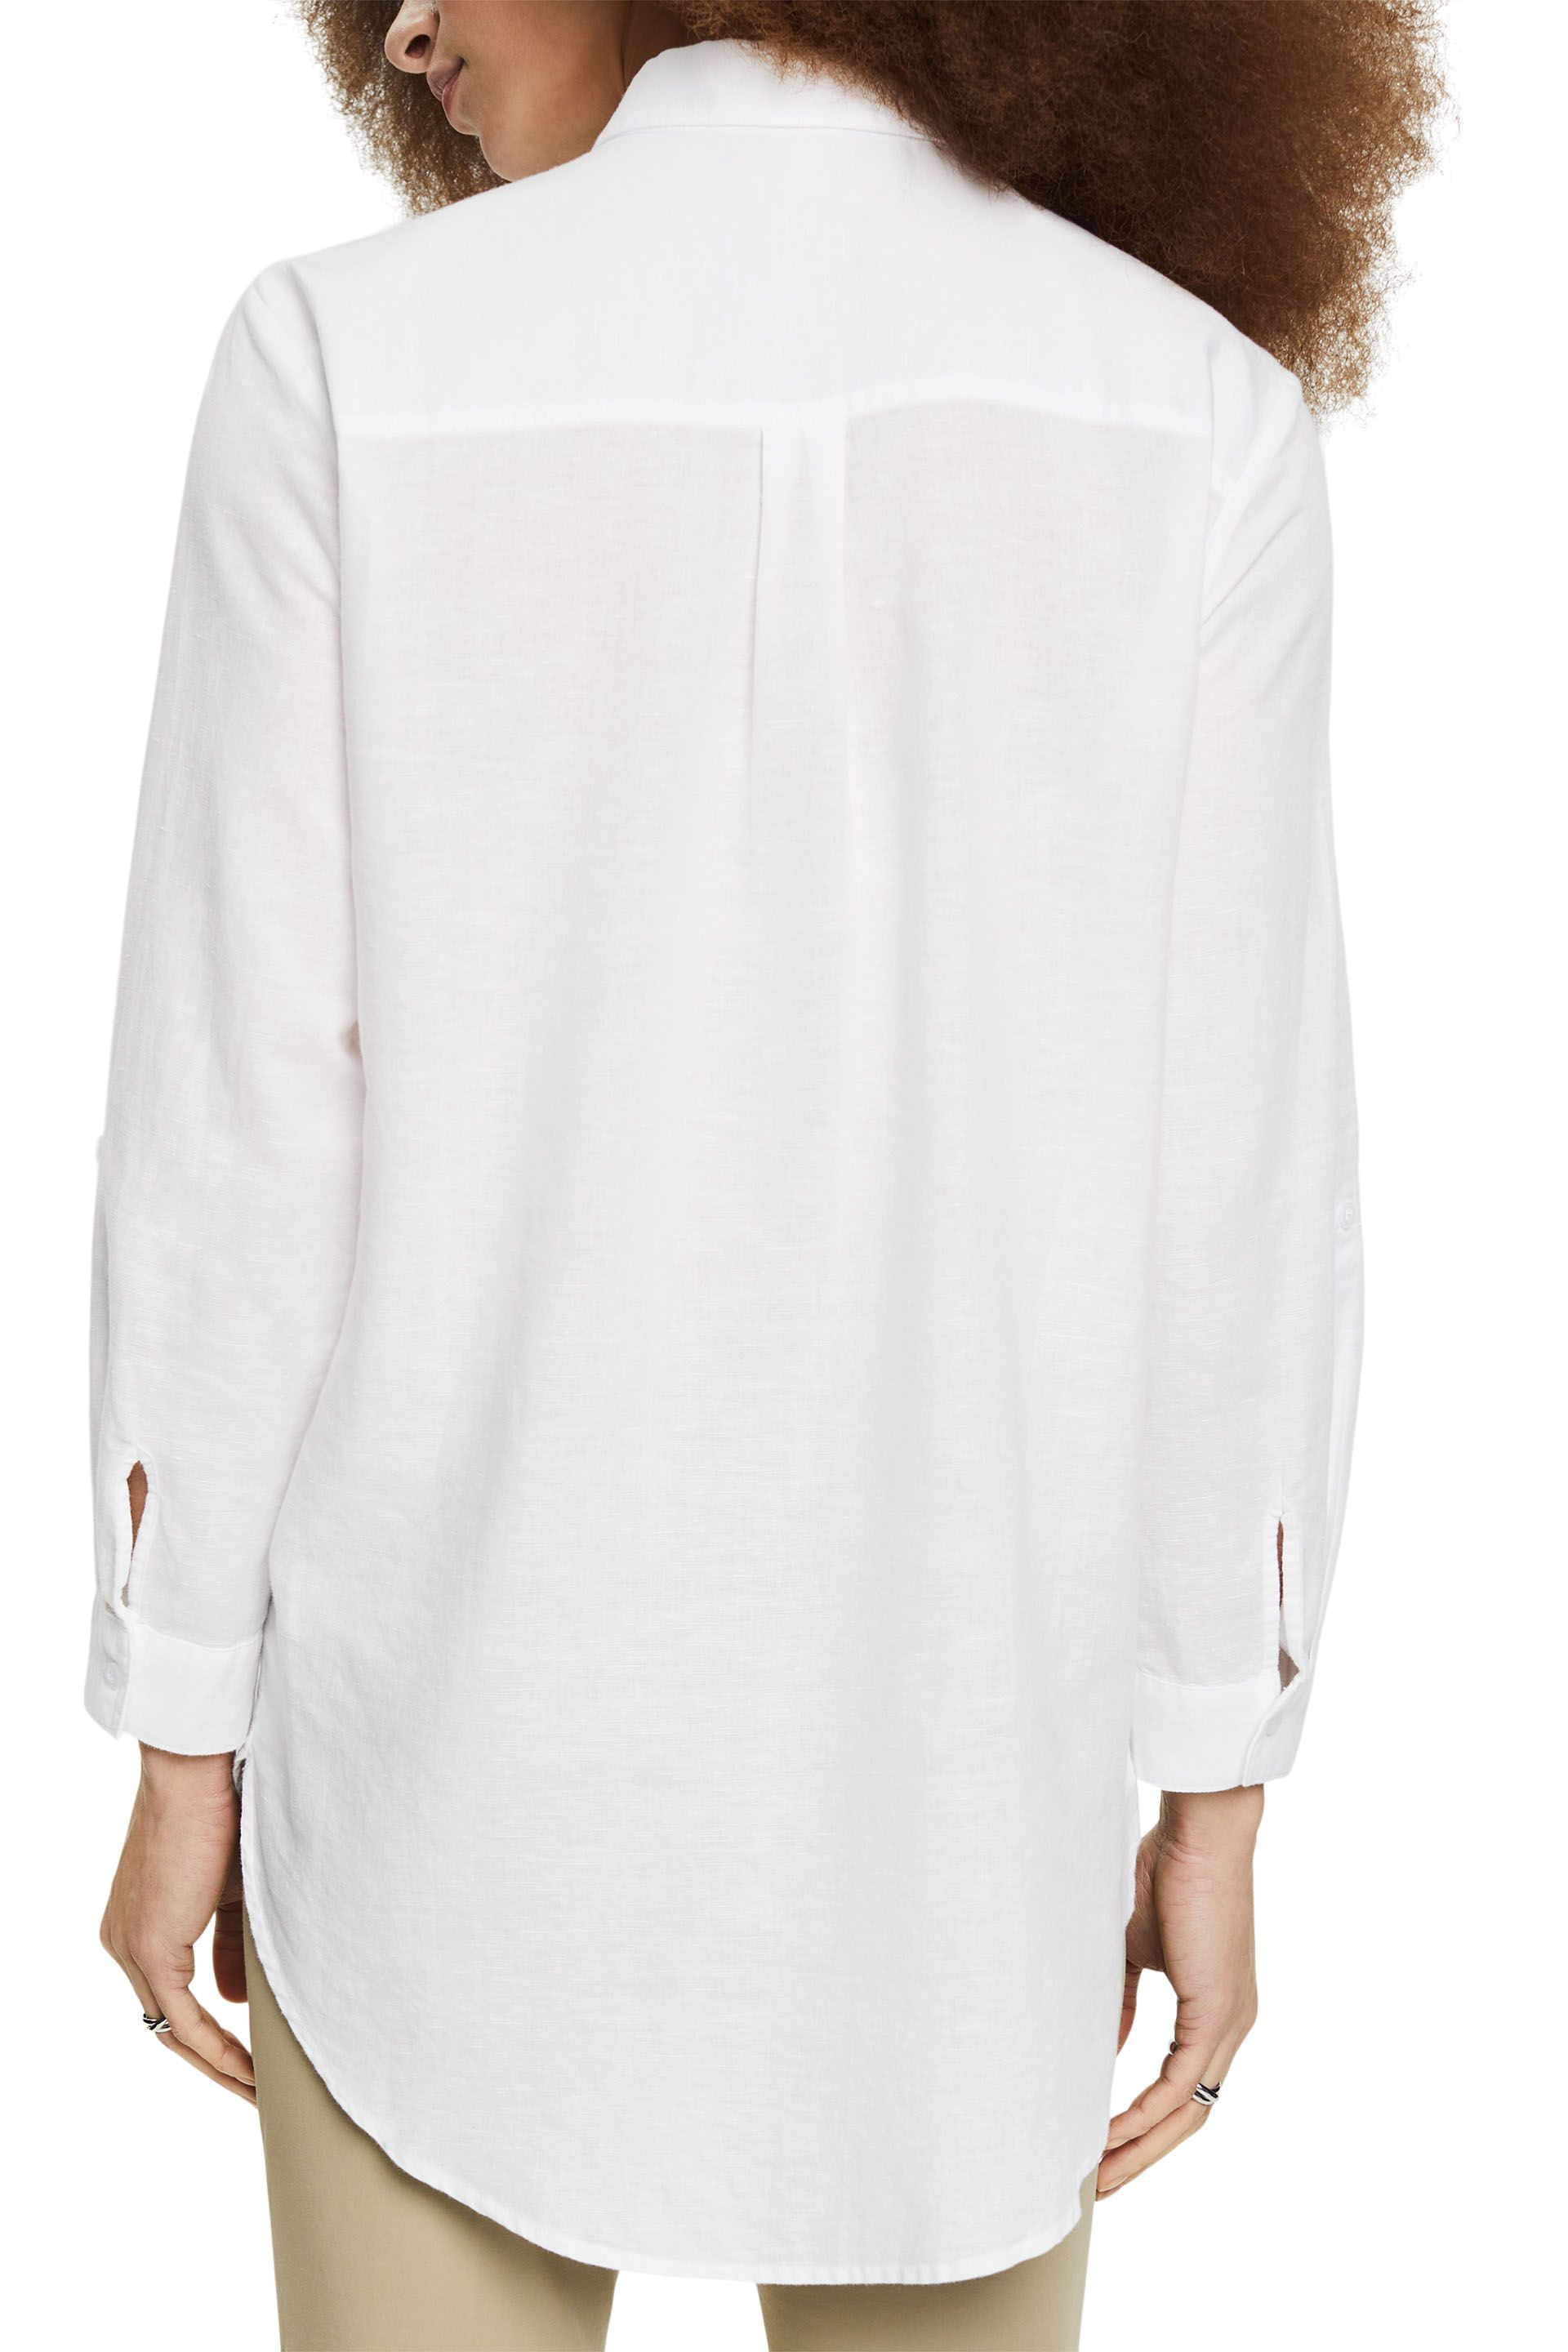 Linen blend shirt, White, large image number 2